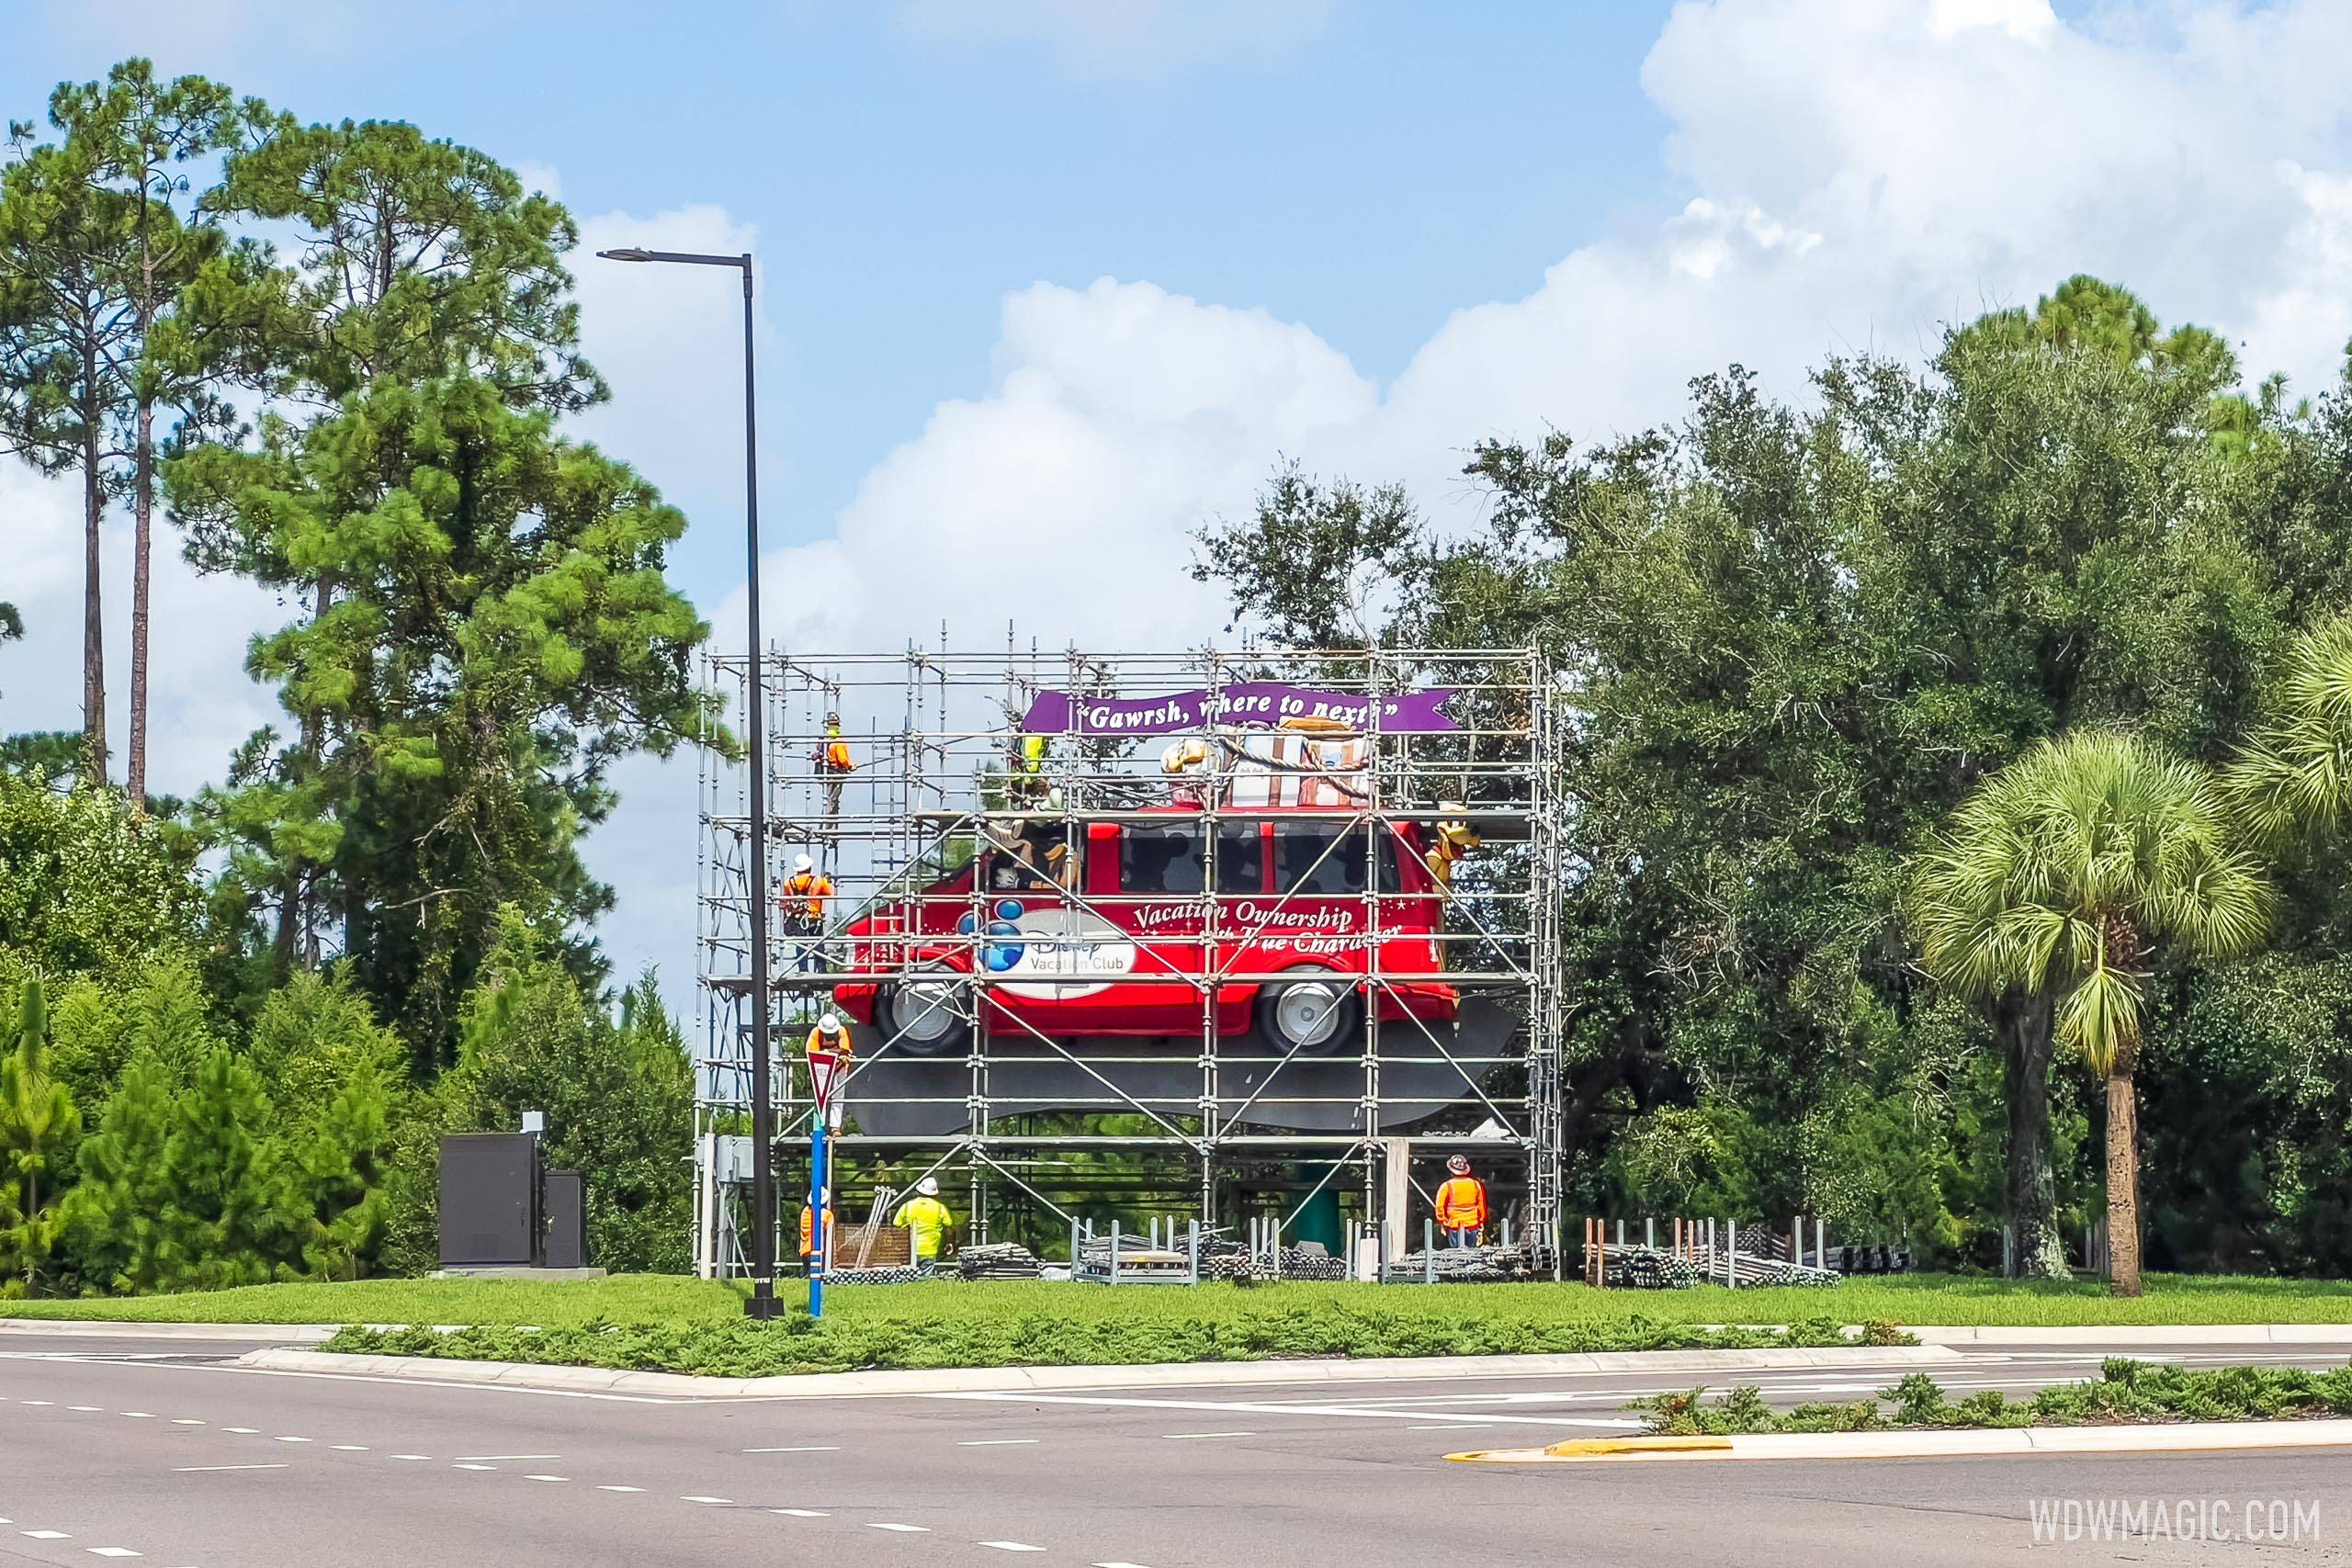 Disney Vacation Club billboard wrapped in scaffolding for refurbishment